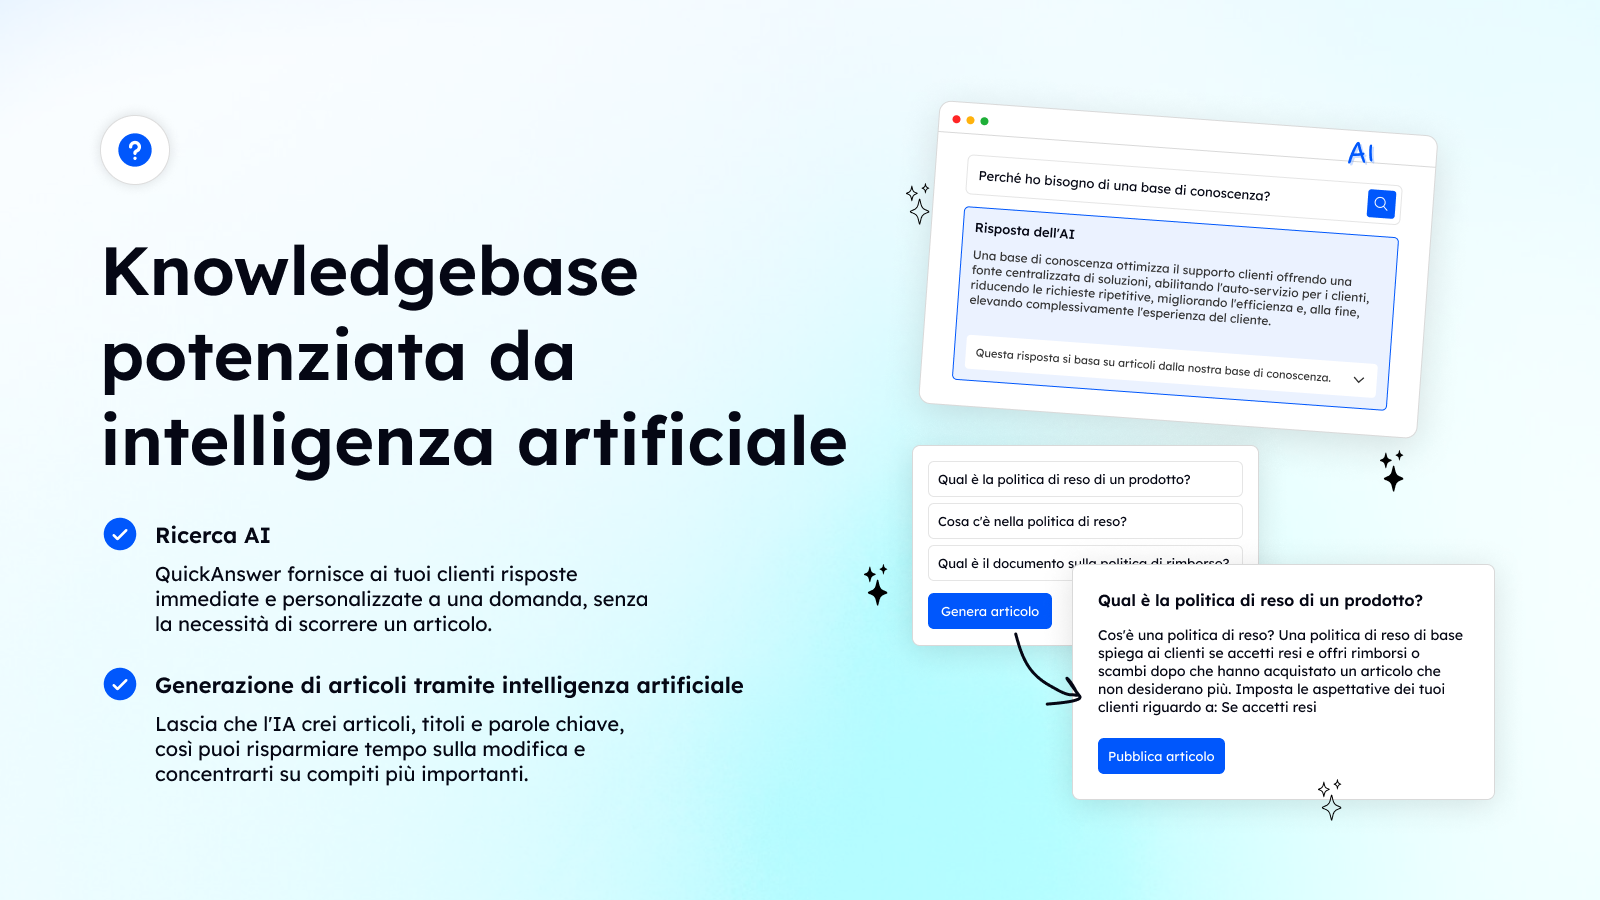 Knowledgebase potenziata da intelligenza artificiale